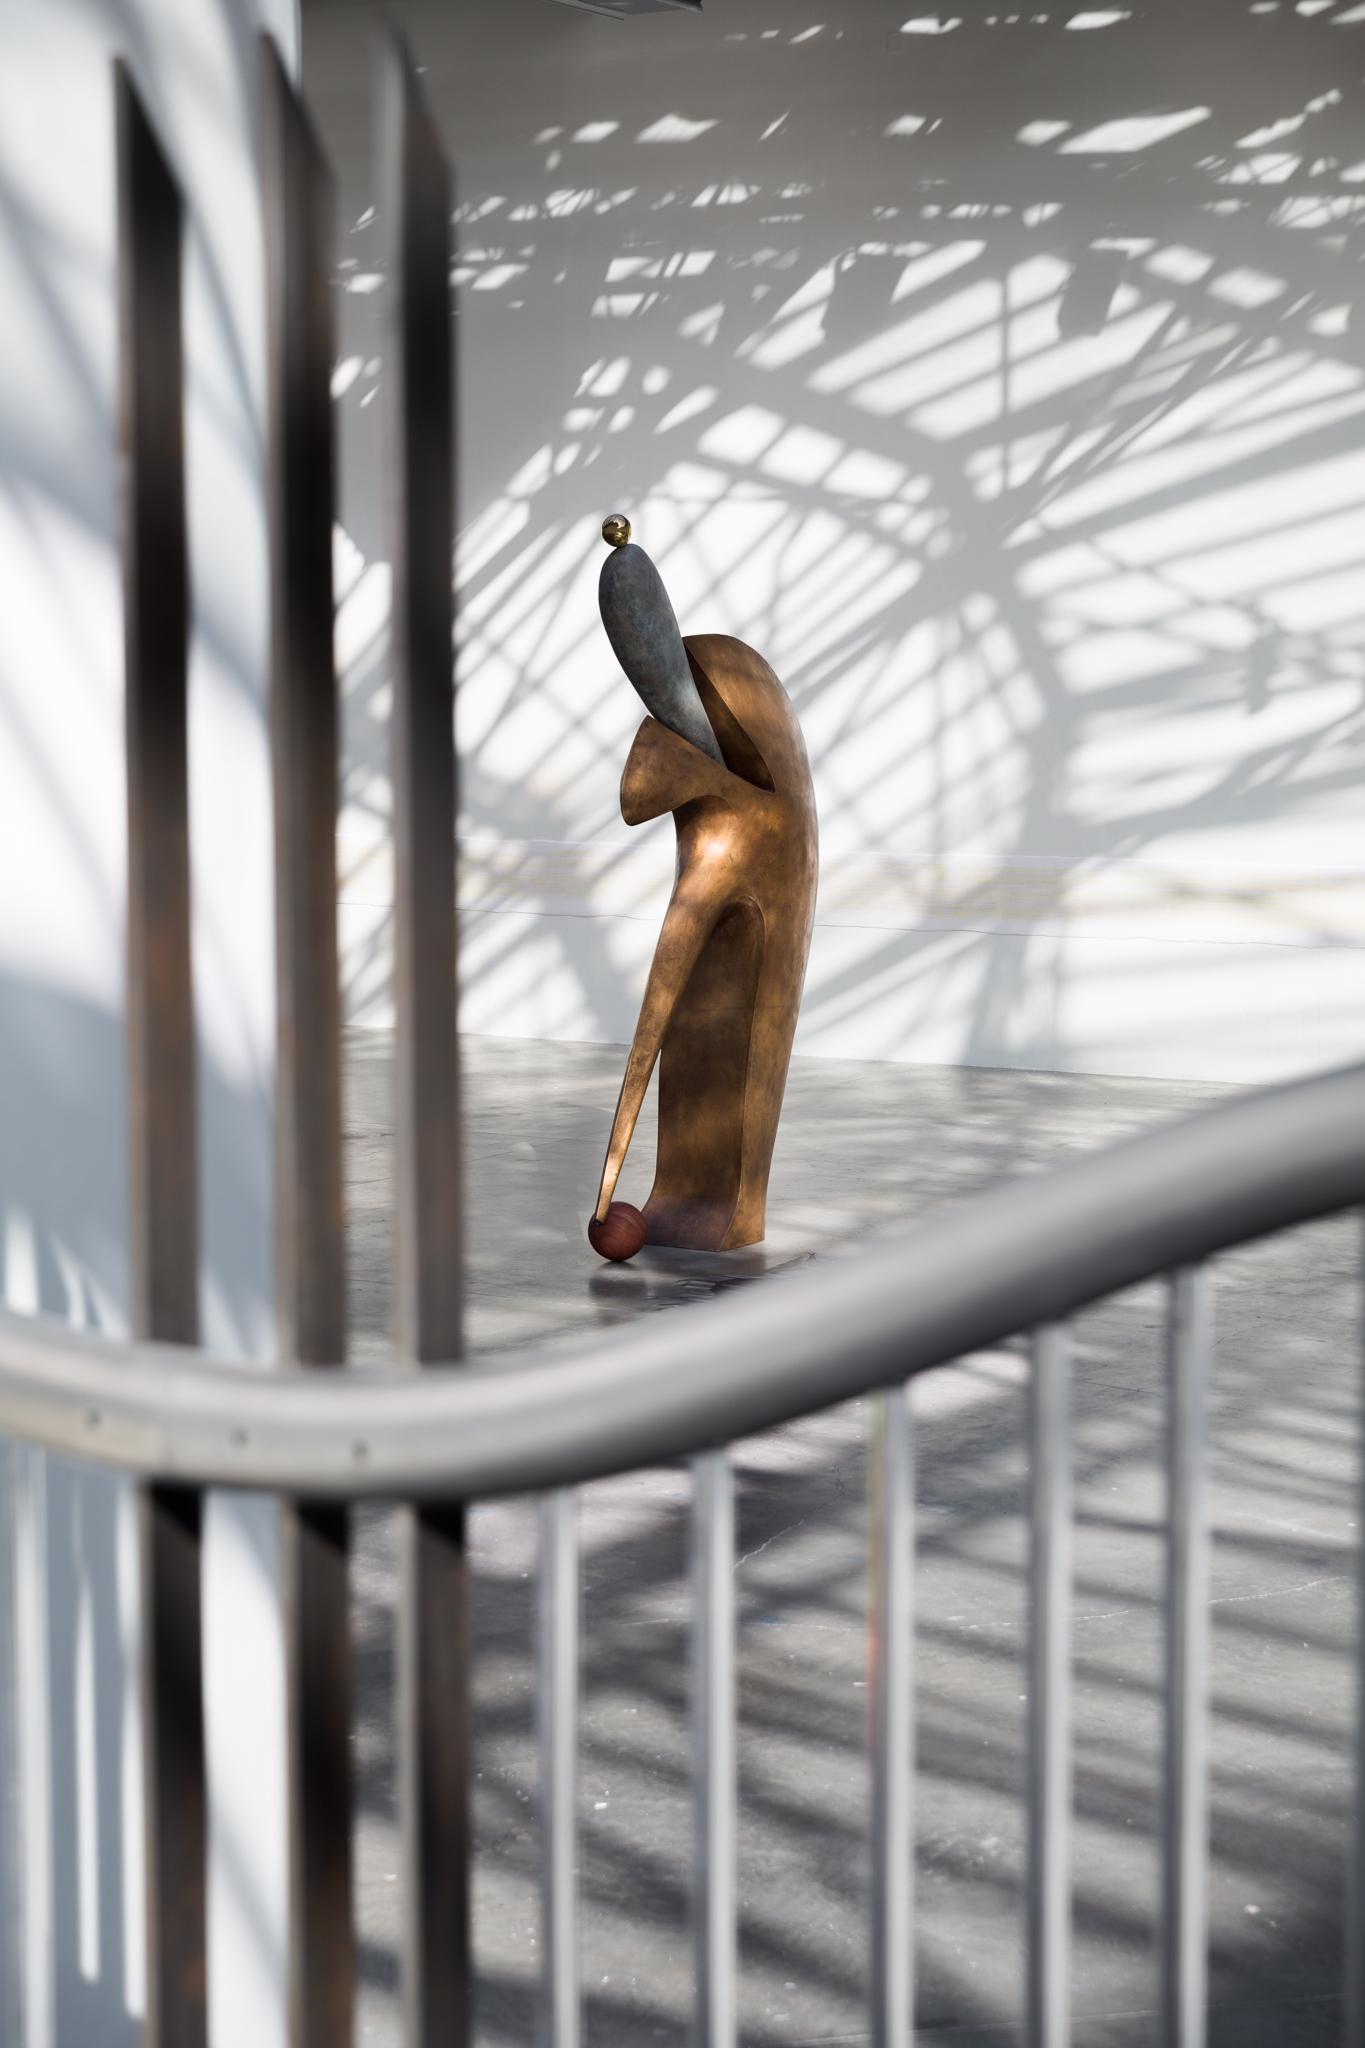 railing-sculpture-henrot-palais-de-tokyo-exhibition-photography-zachary-newton.jpg